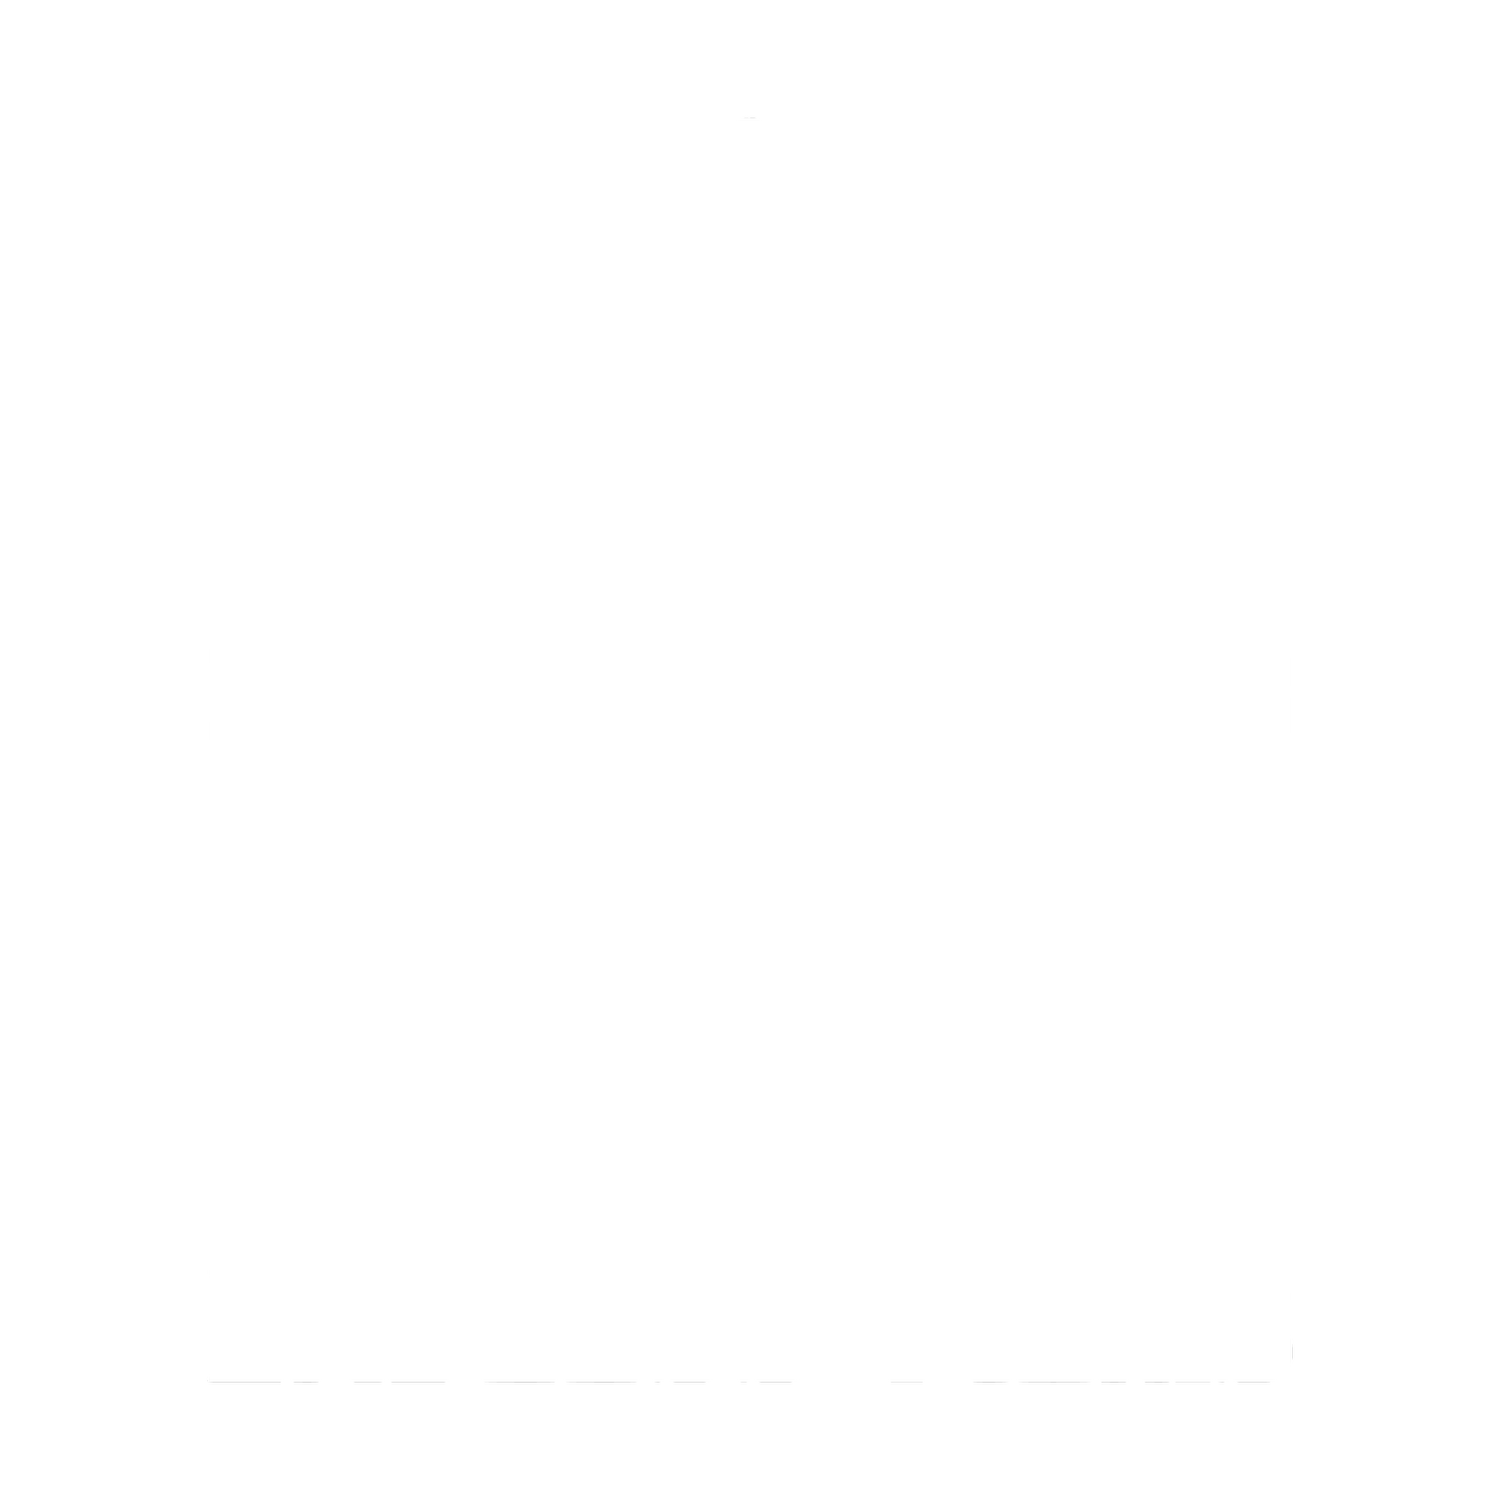 Endless Films